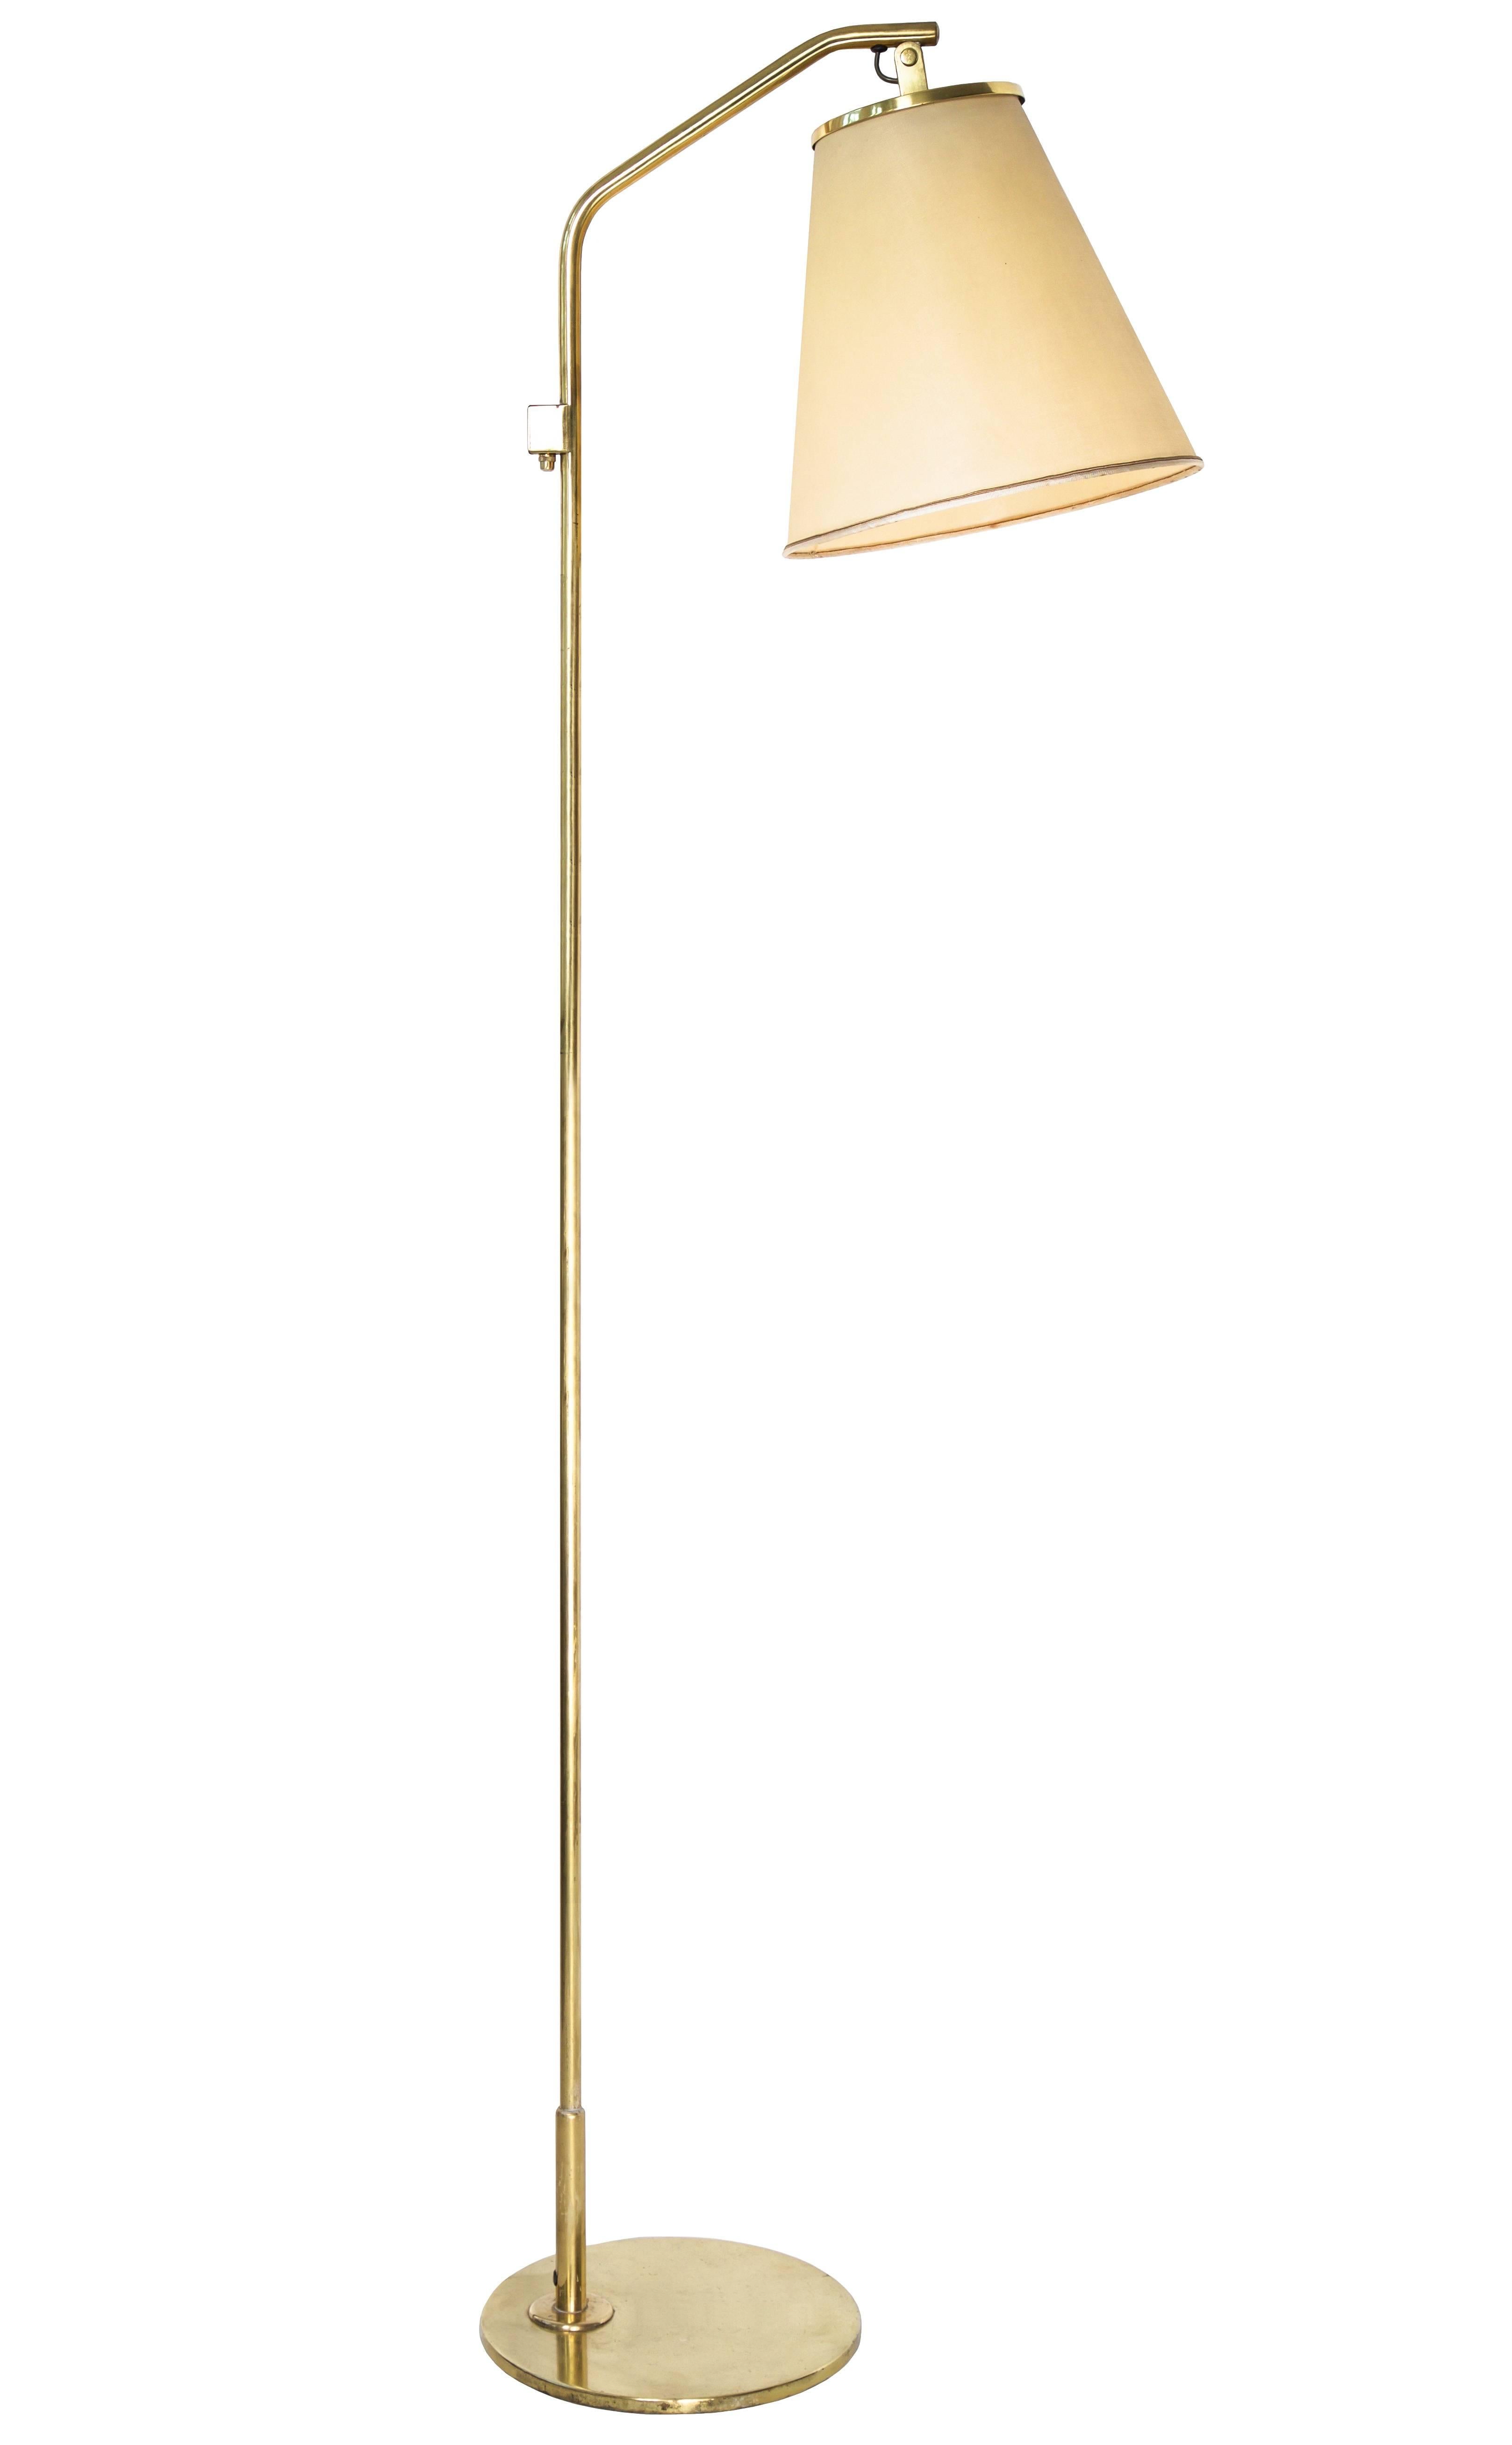 Paavo Tynell floor lamp model 9613

Taito Oy, Helsinki, Finland ca. 1940s

Brass, parchment shade. 

Height 160 cm, depth 45 cm, width 29 cm. 

Literature: Idman Lighting catalog no.135, pg 46 (Idman model no.9631).